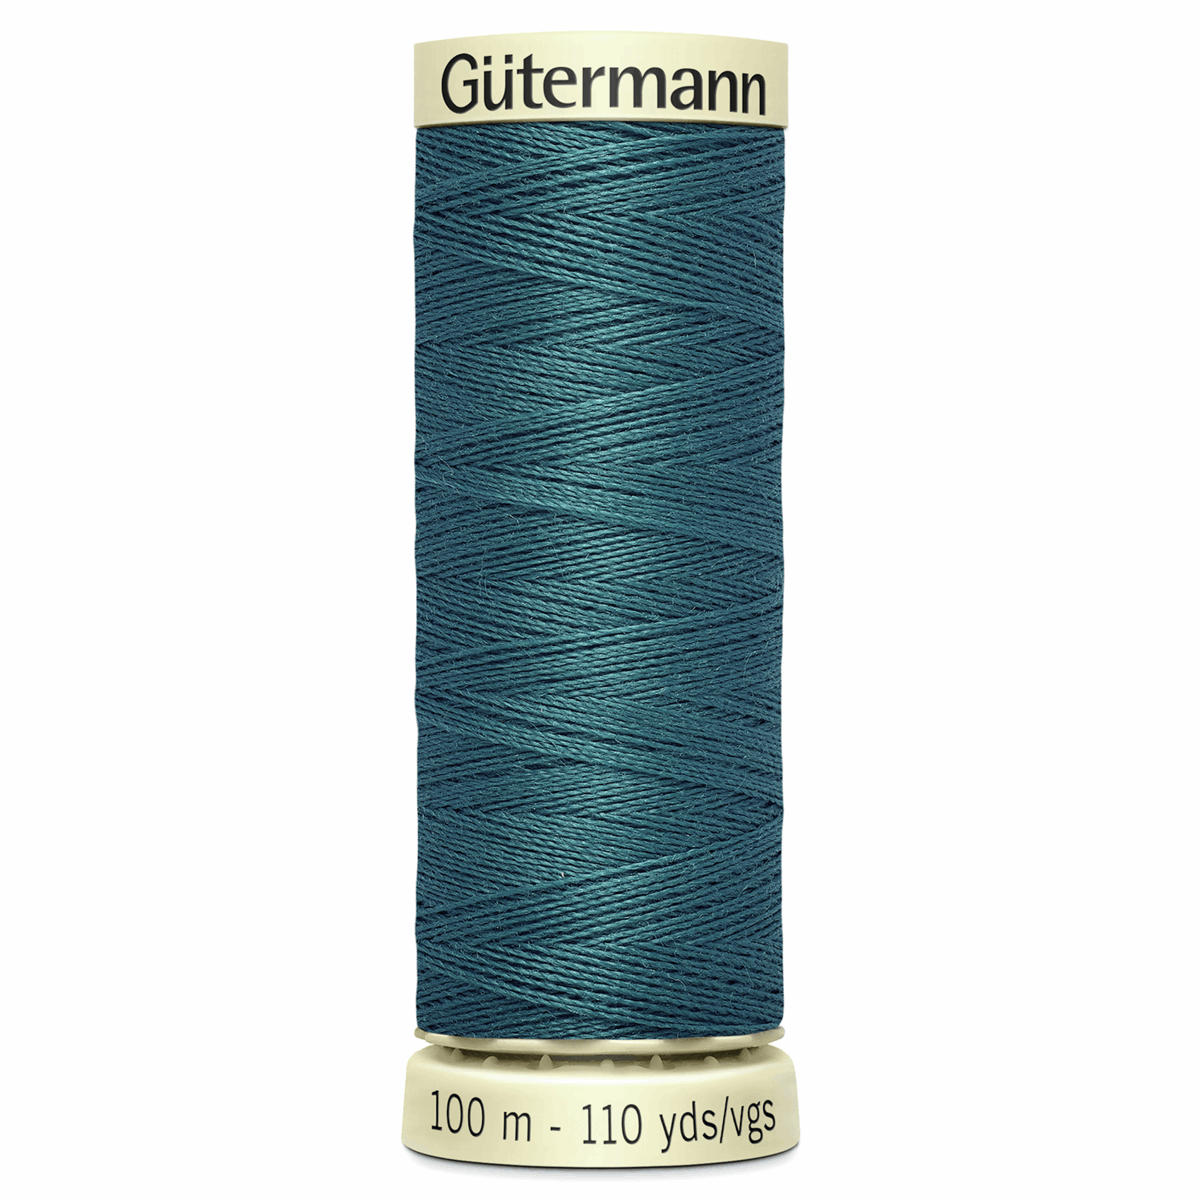 Gutermann Sew-All Thread 100m - Dark Teal (#223)